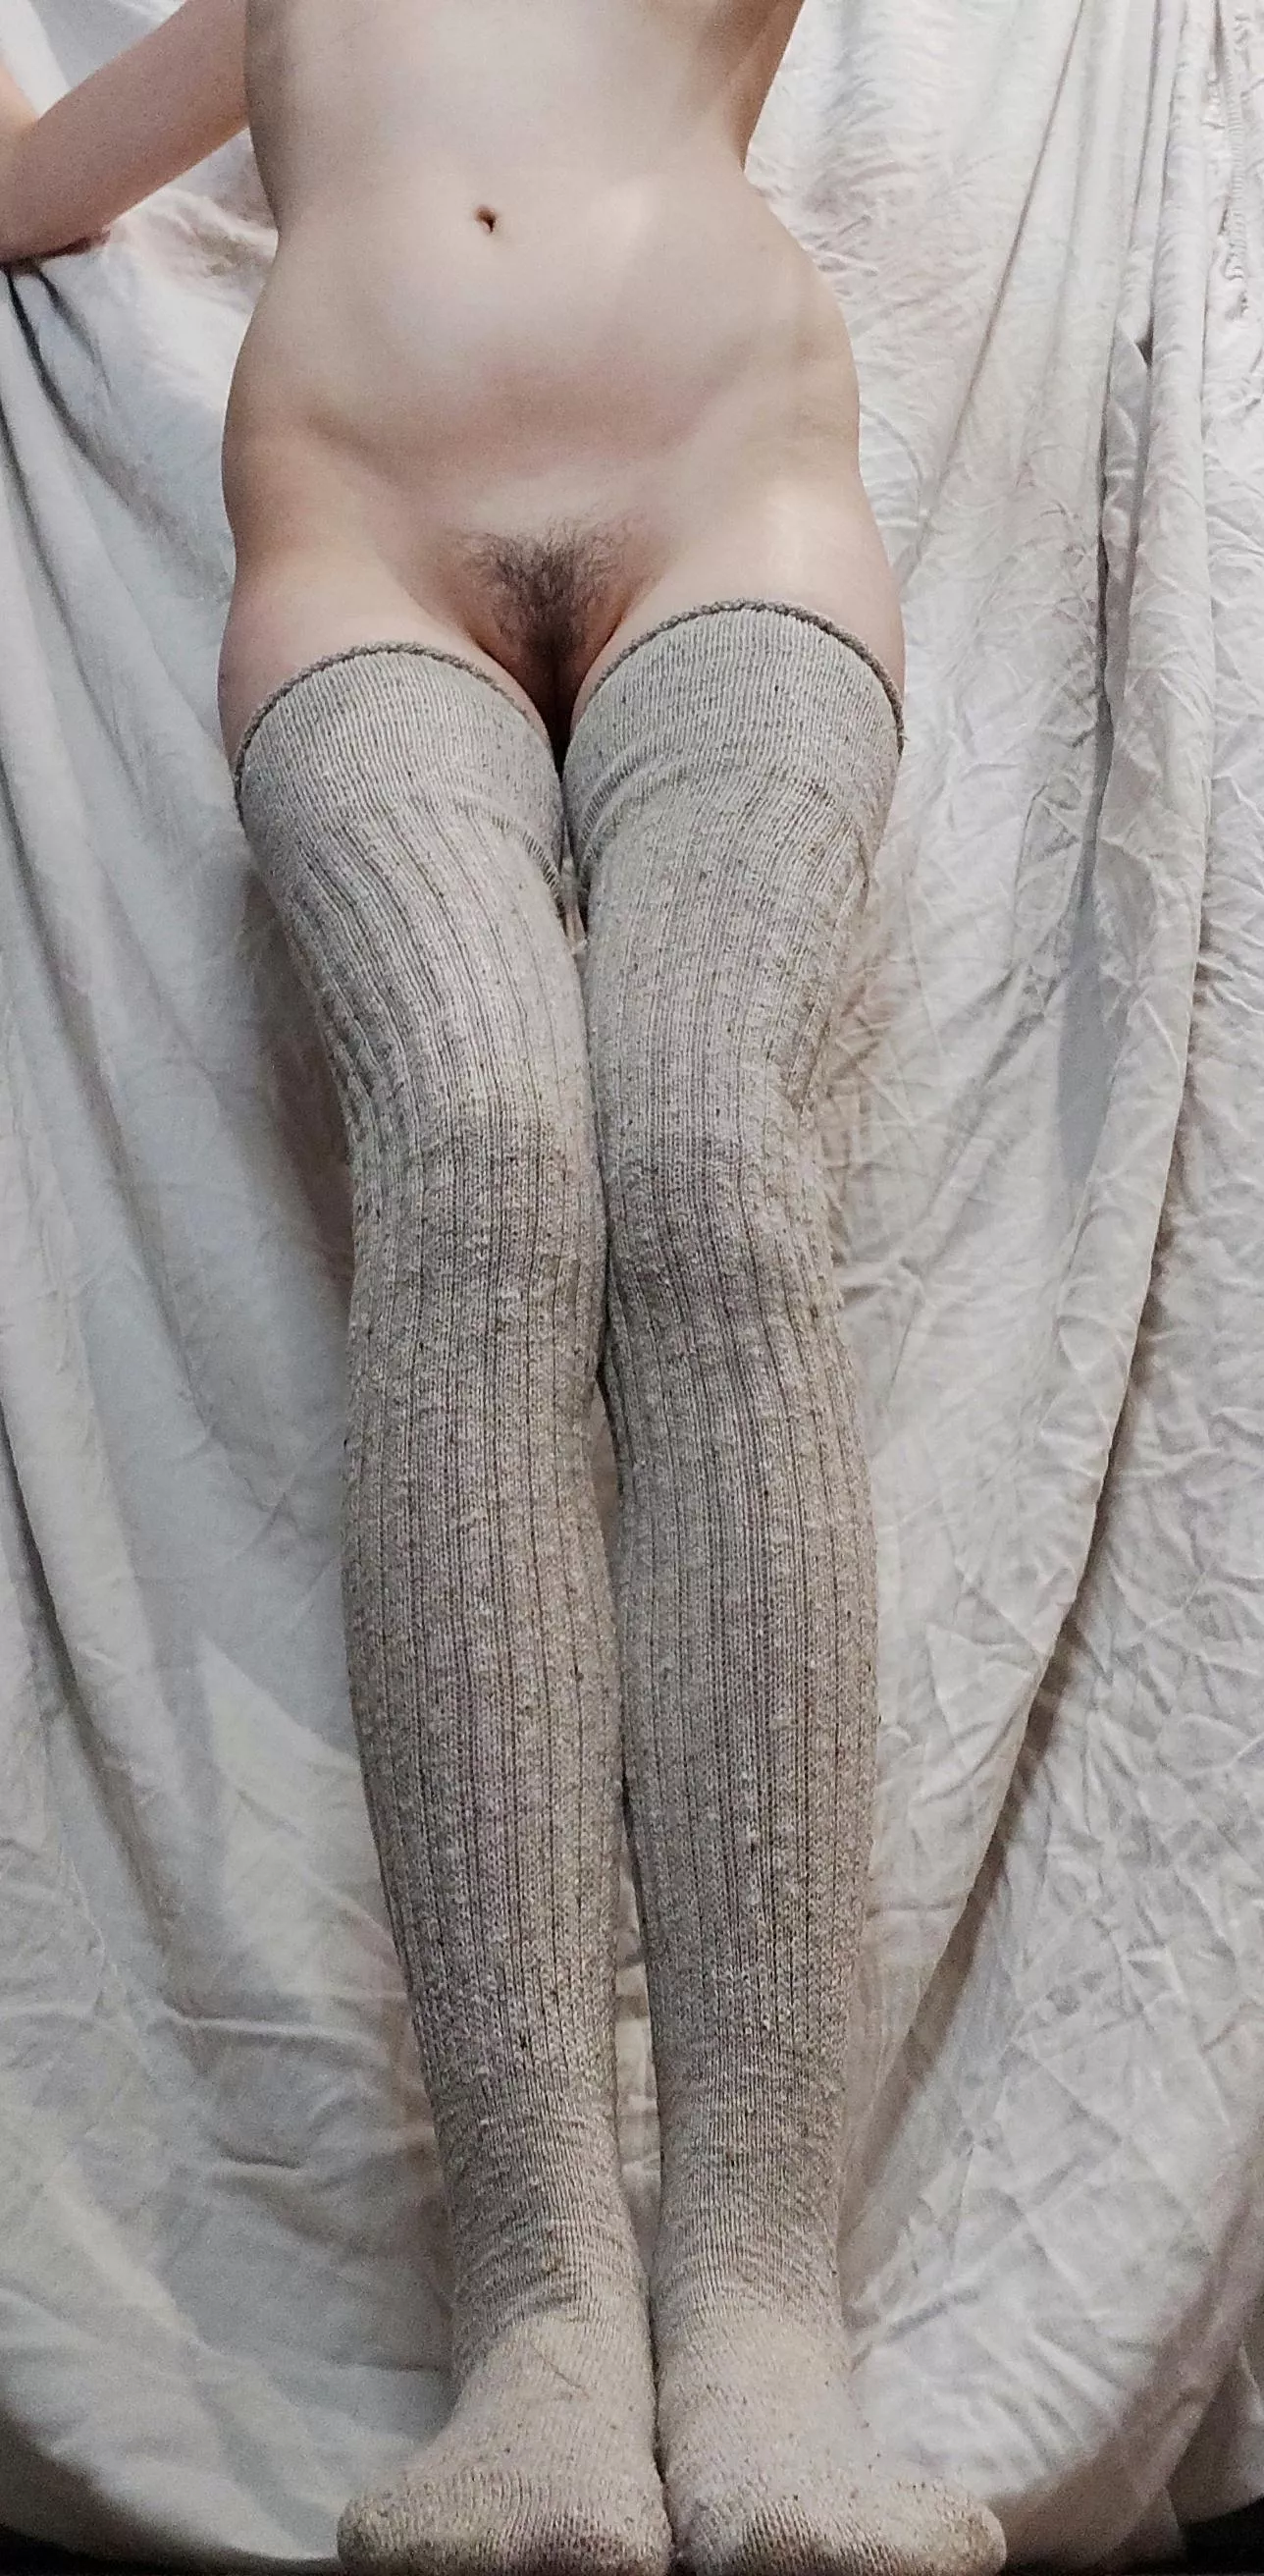 High Socks - F] How do you like my extra long thigh high socks? nudes : socksgonewild |  NUDE-PICS.ORG